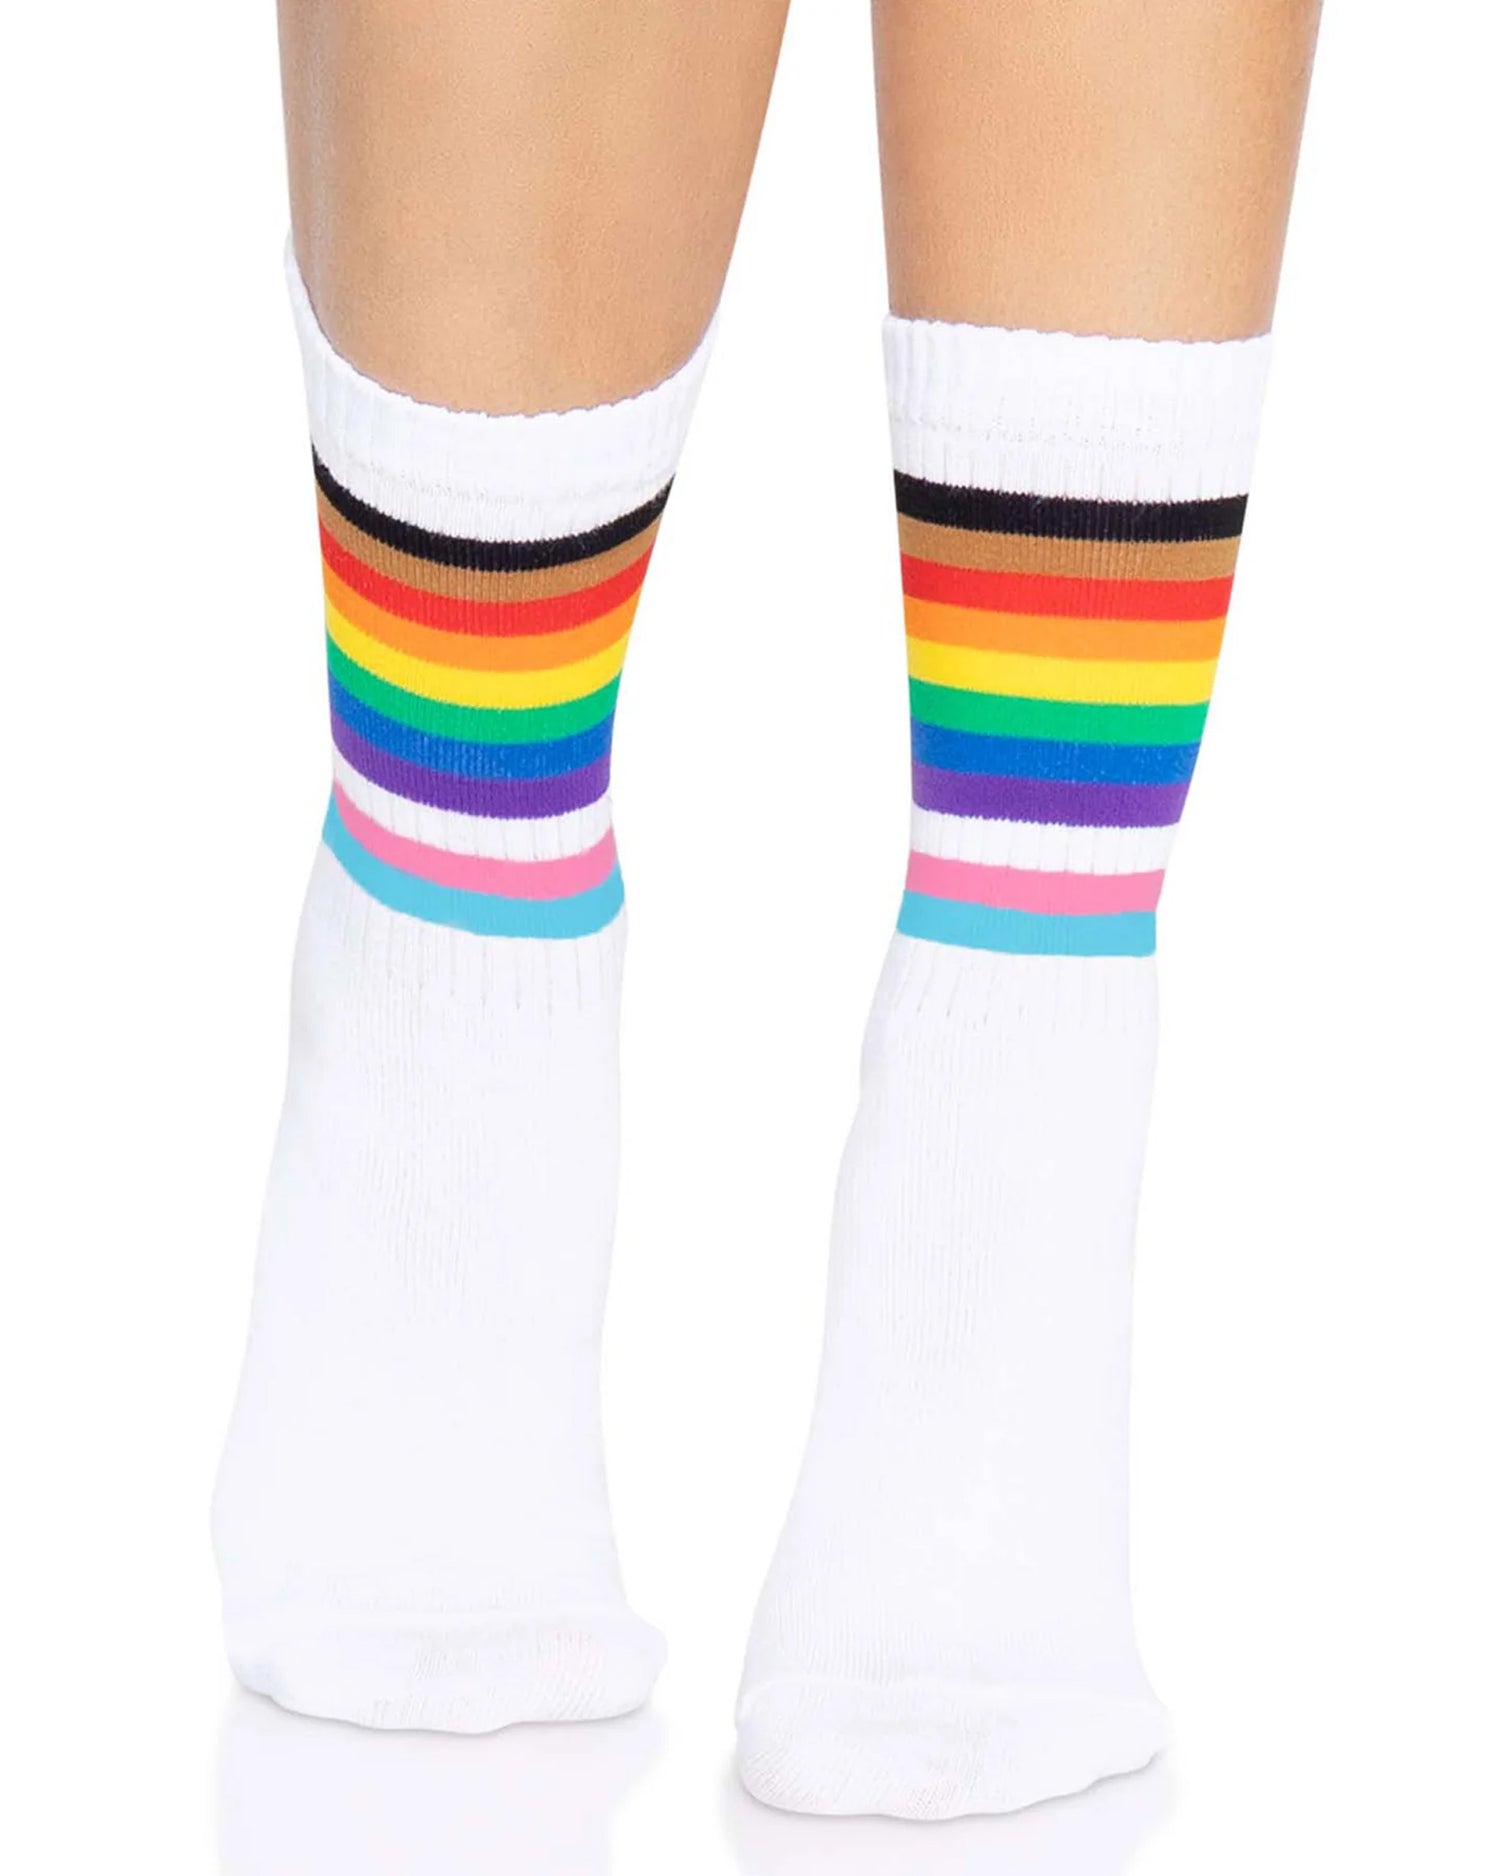 White ankle socks with LGBTQ+ rainbow stripes.